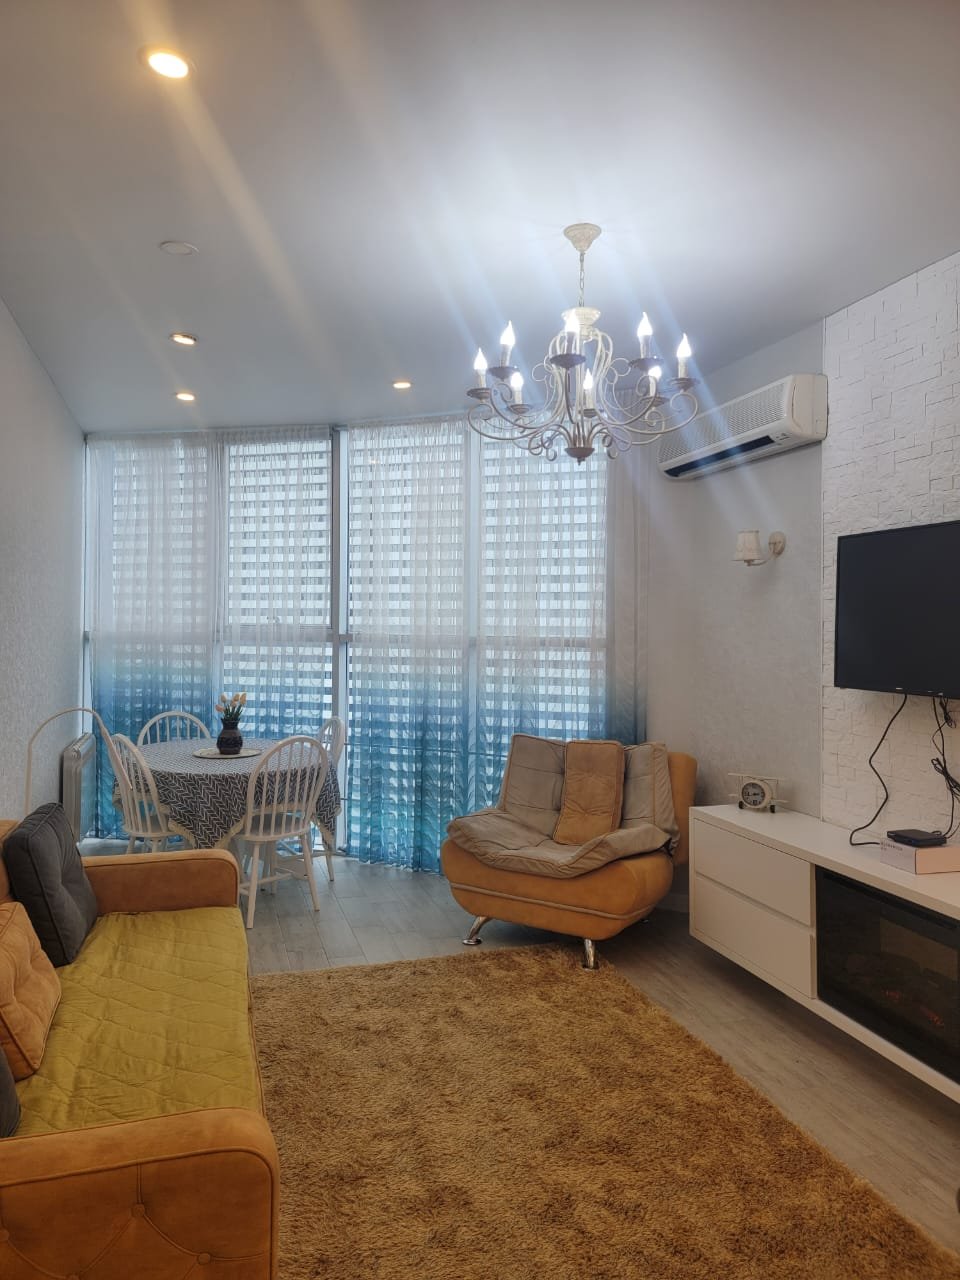 2-bedroom apartment near the sea id-924 - Batumi Vacation Rentals